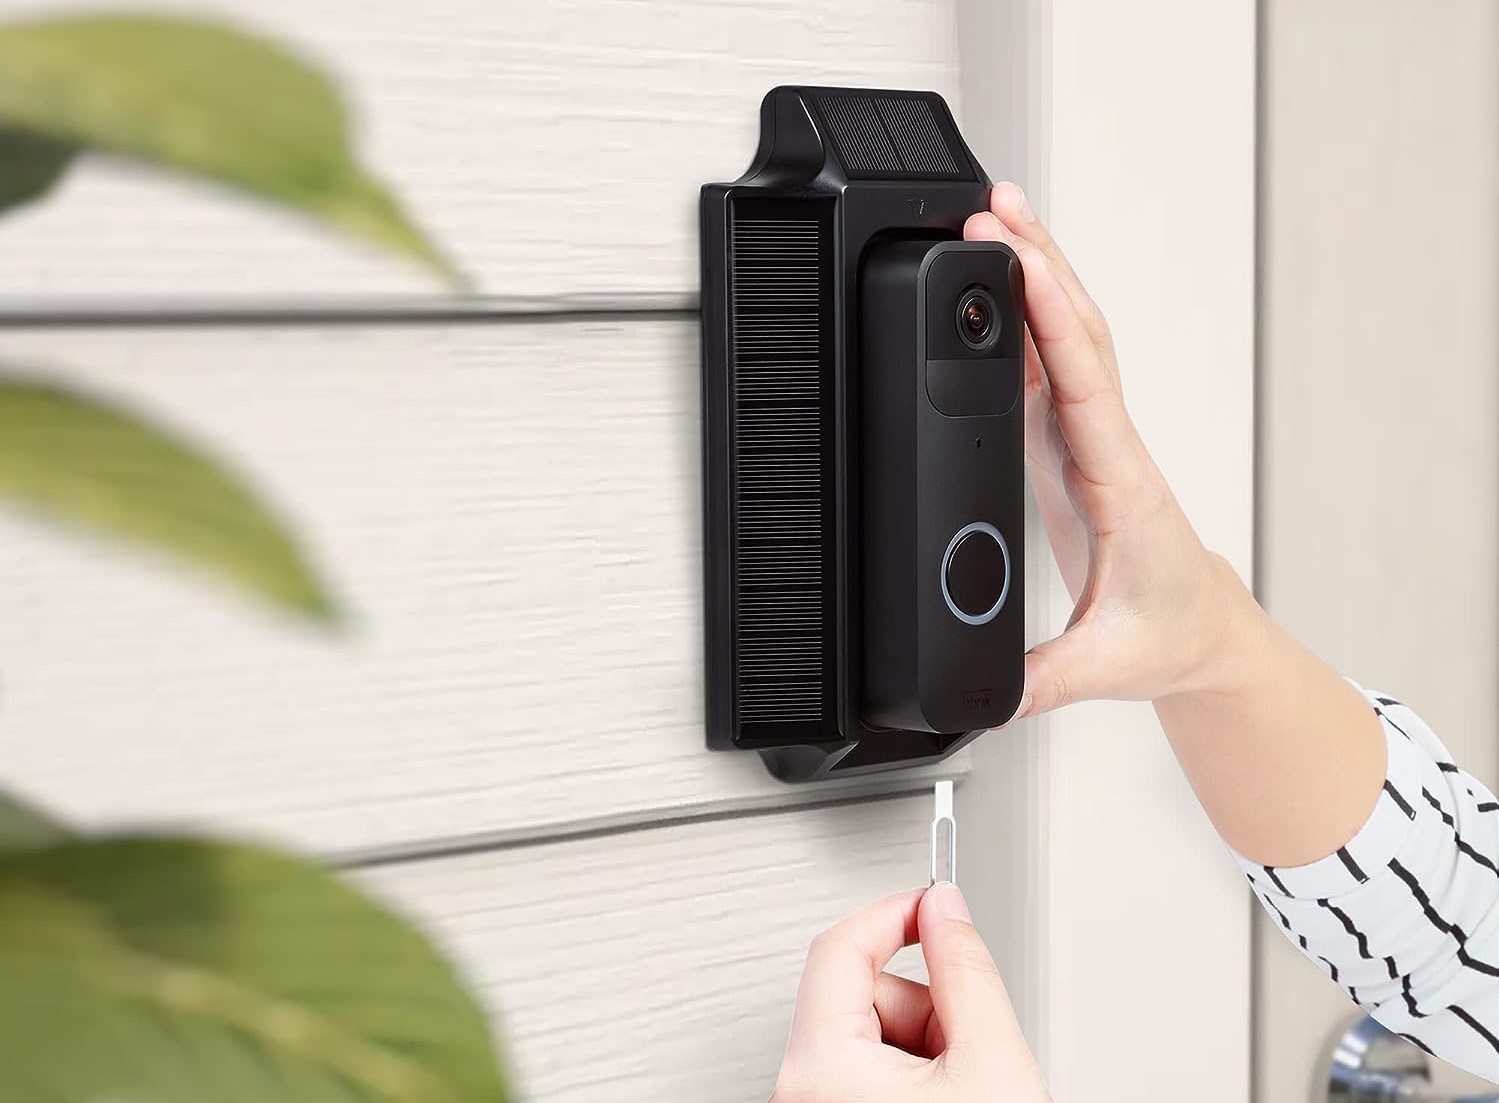 How To Remove Blink Doorbell From Mount